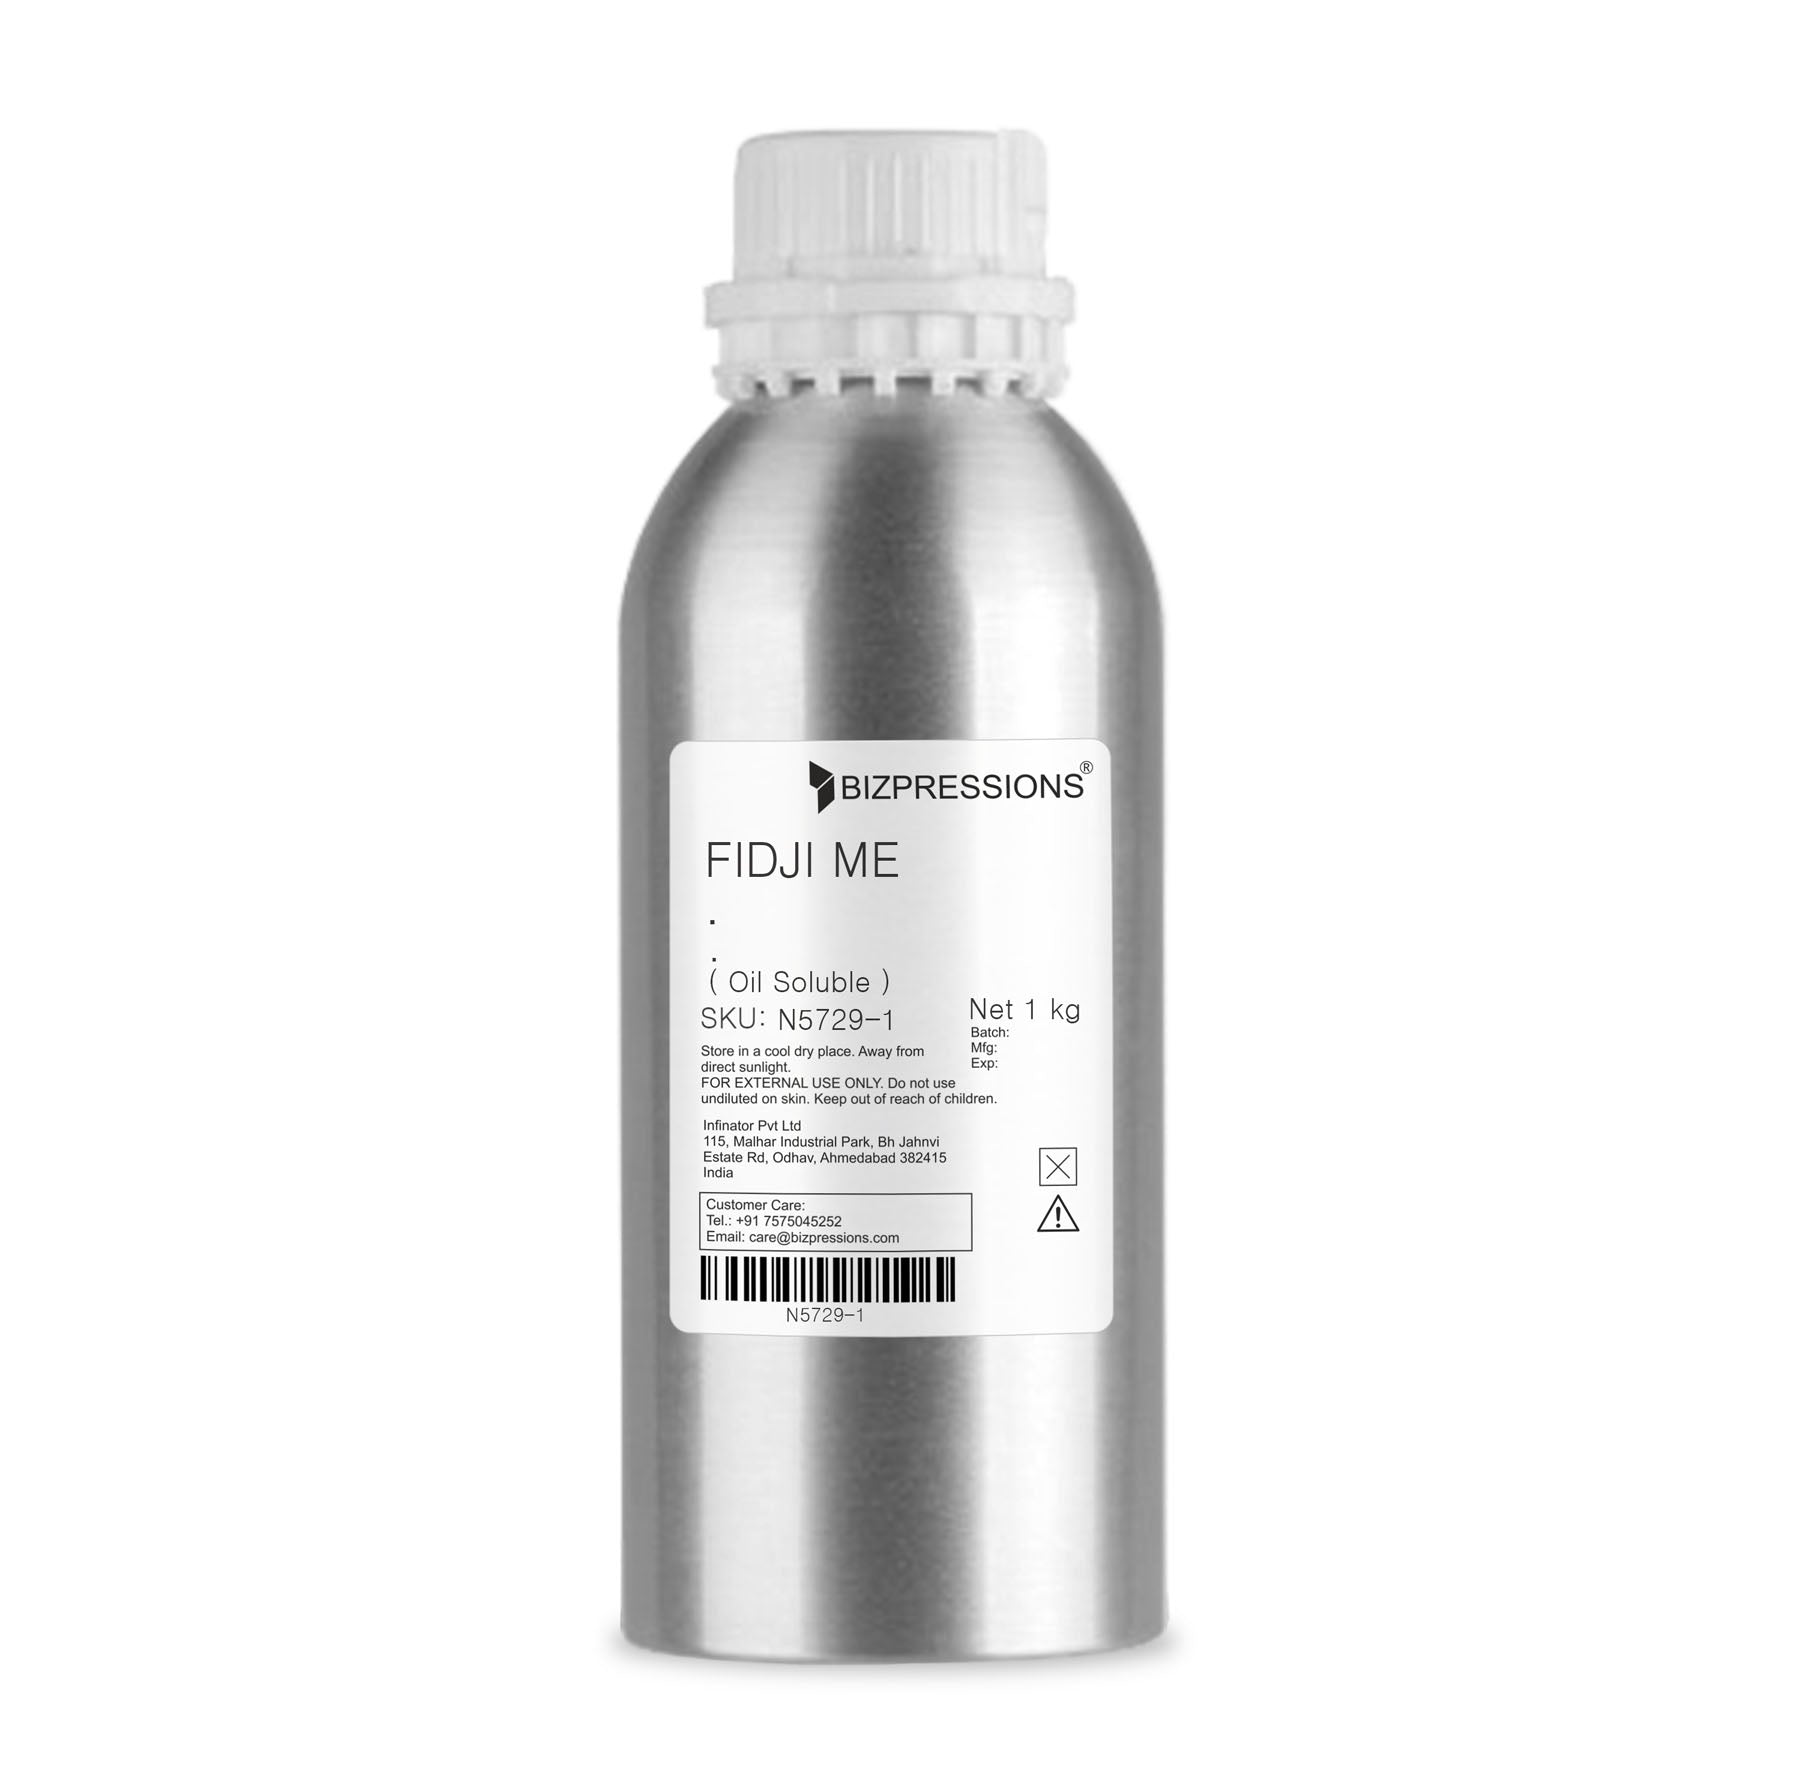 FIDJI ME - Fragrance ( Oil Soluble ) - 1 kg